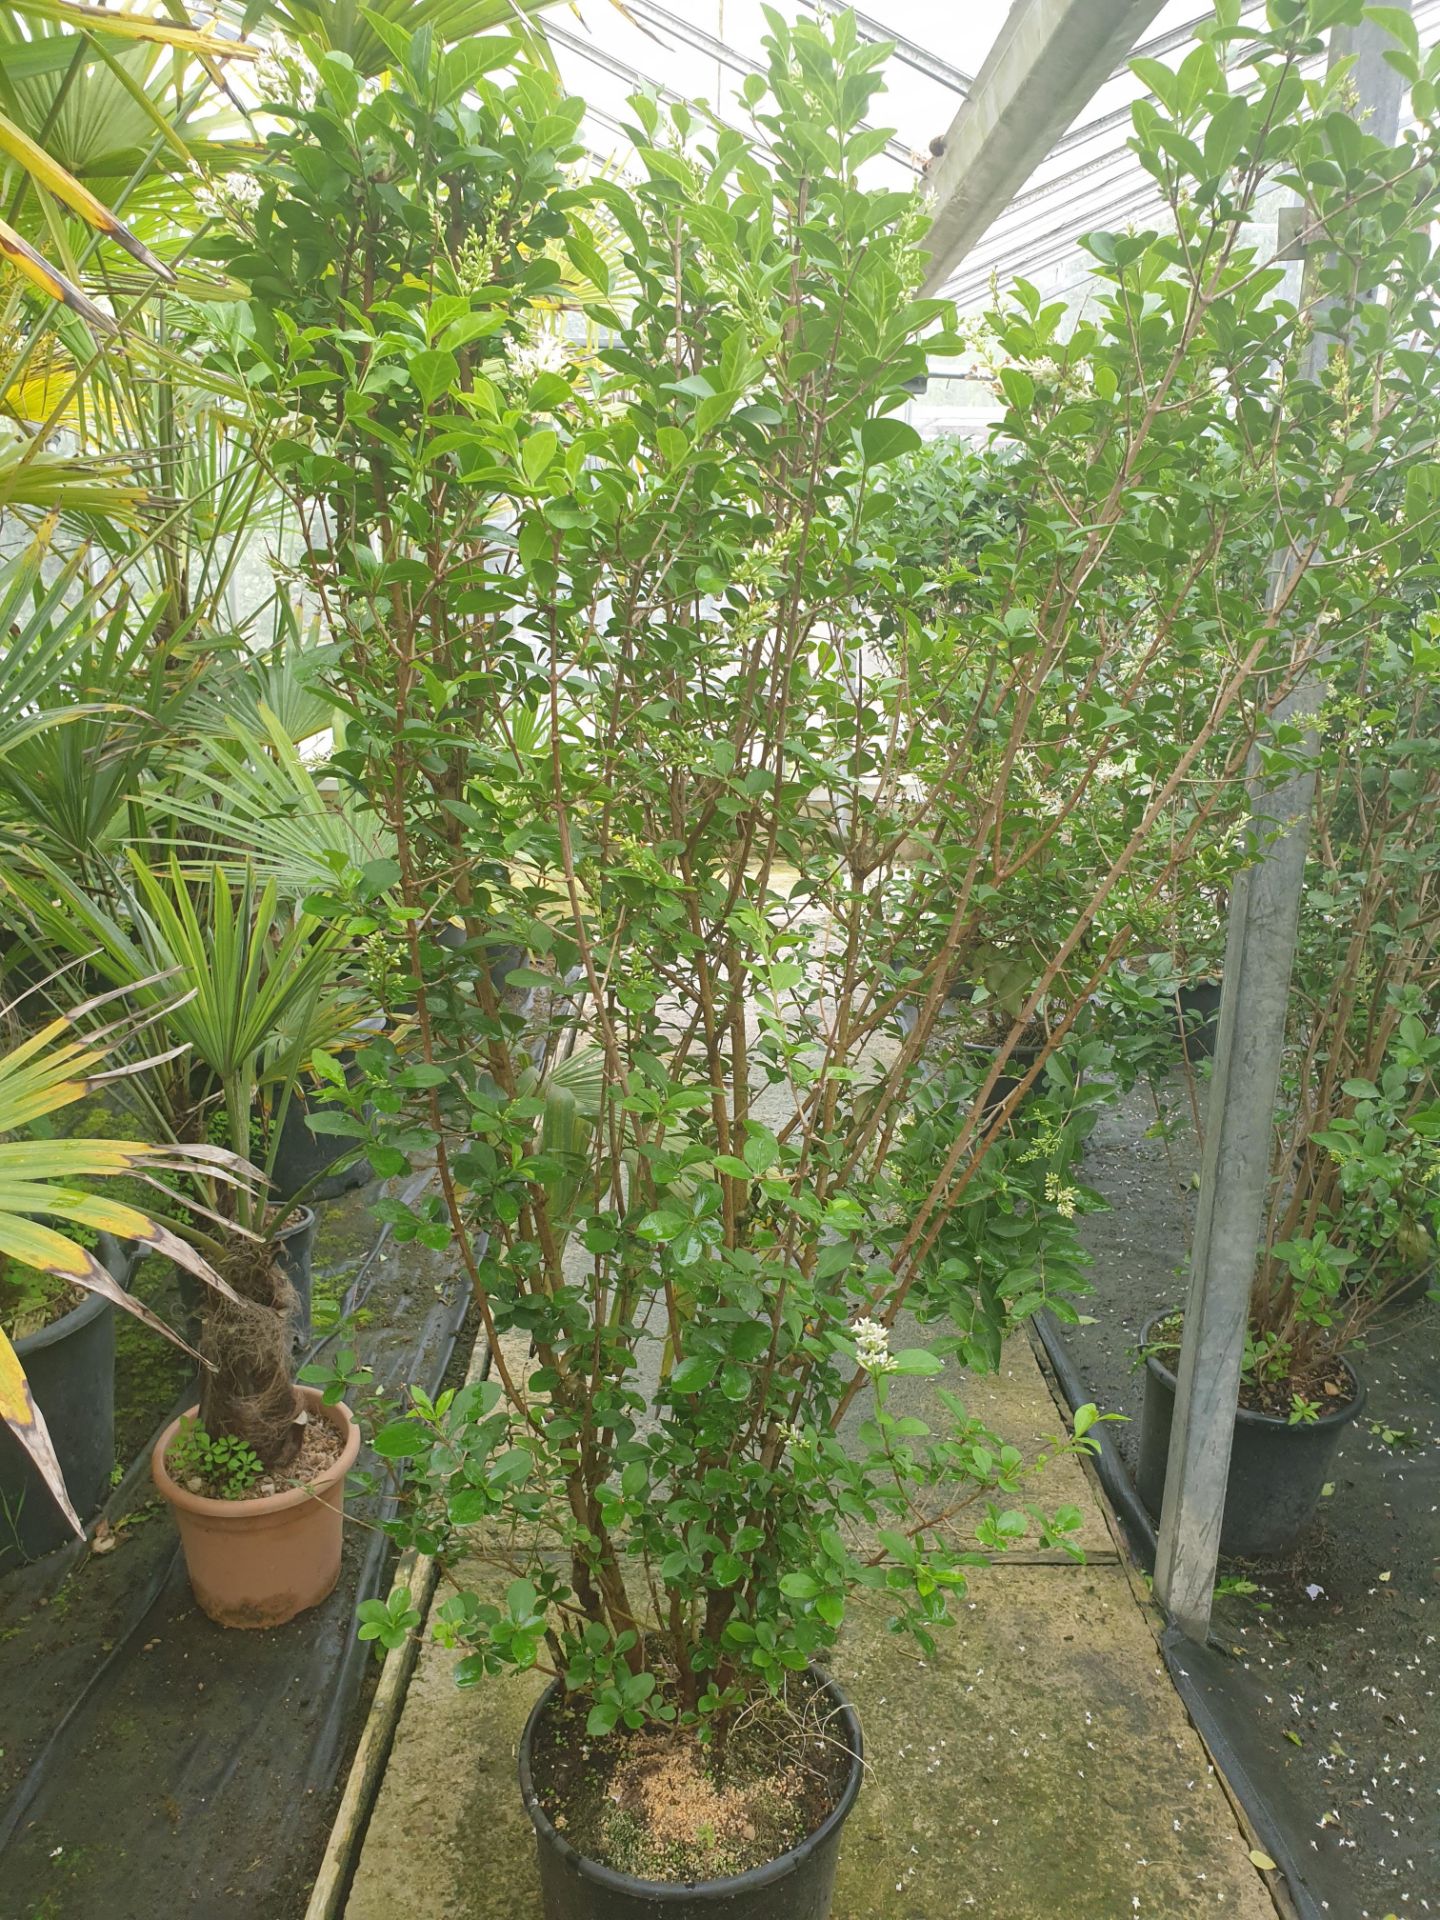 10 x Ligustrum Ovalifolium - instant hedge 1.8m high